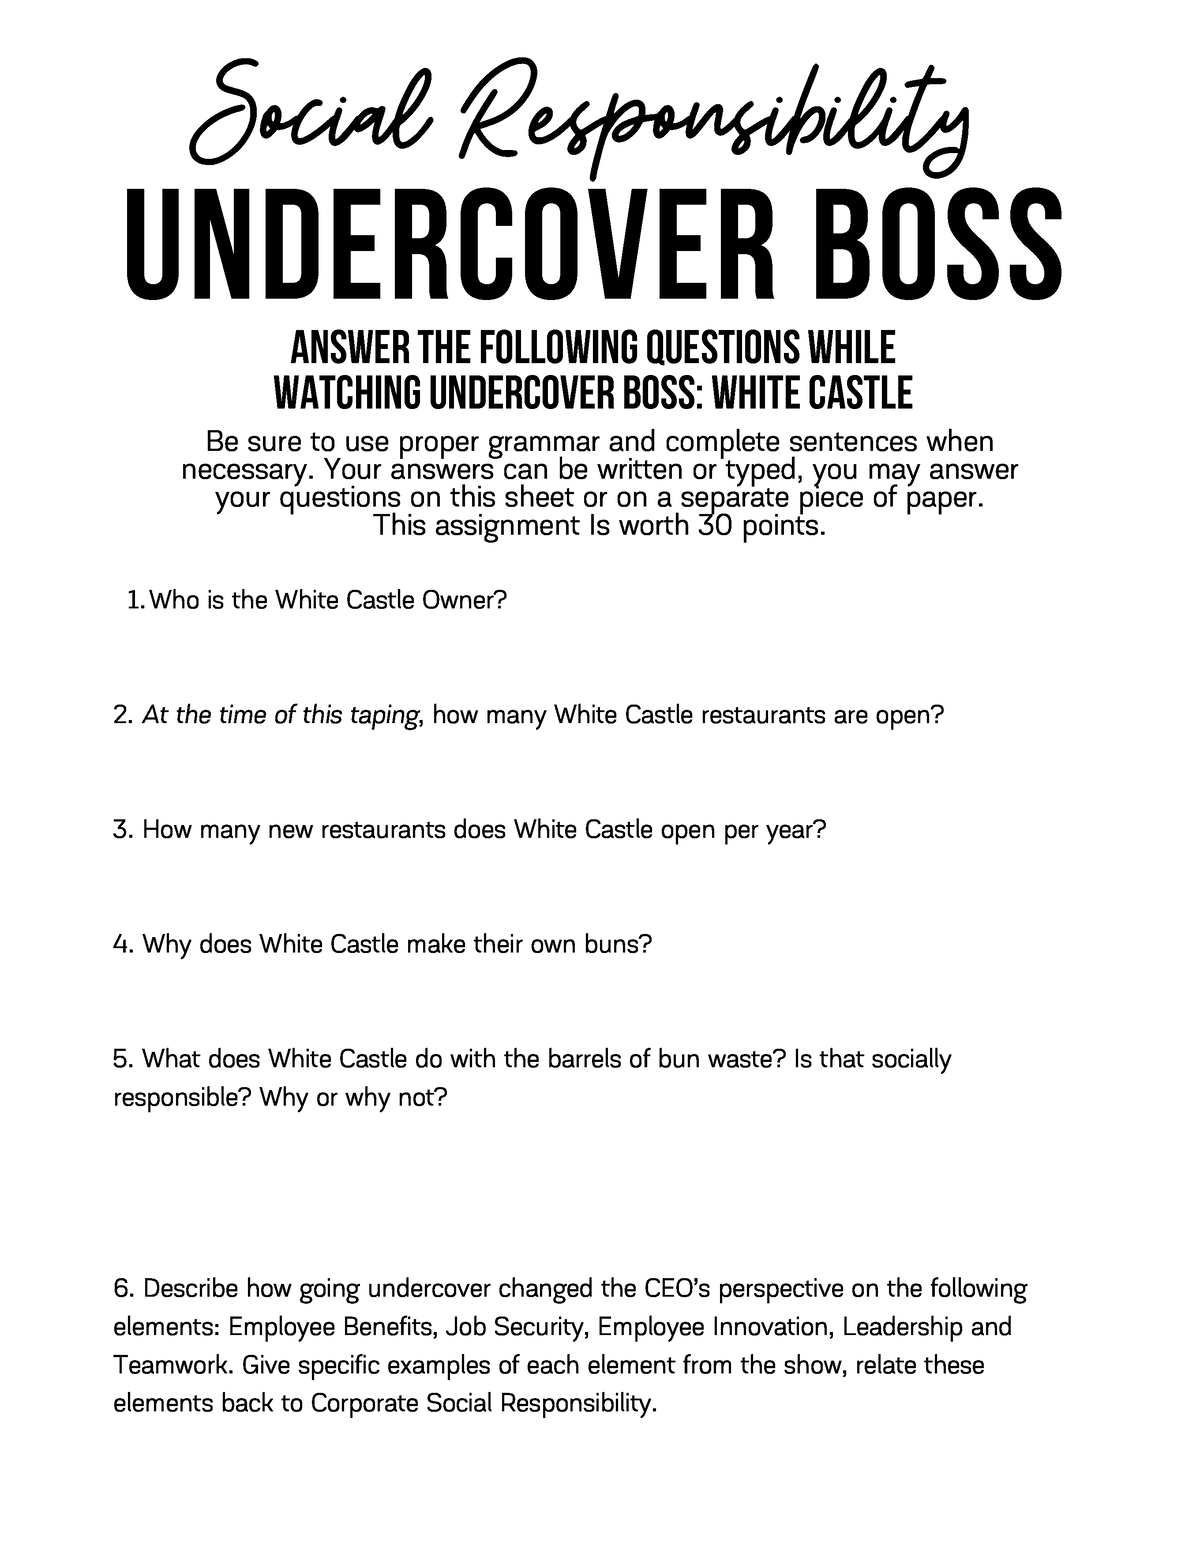 Undercover Boss Social Responsibility Worksheet 1 Social